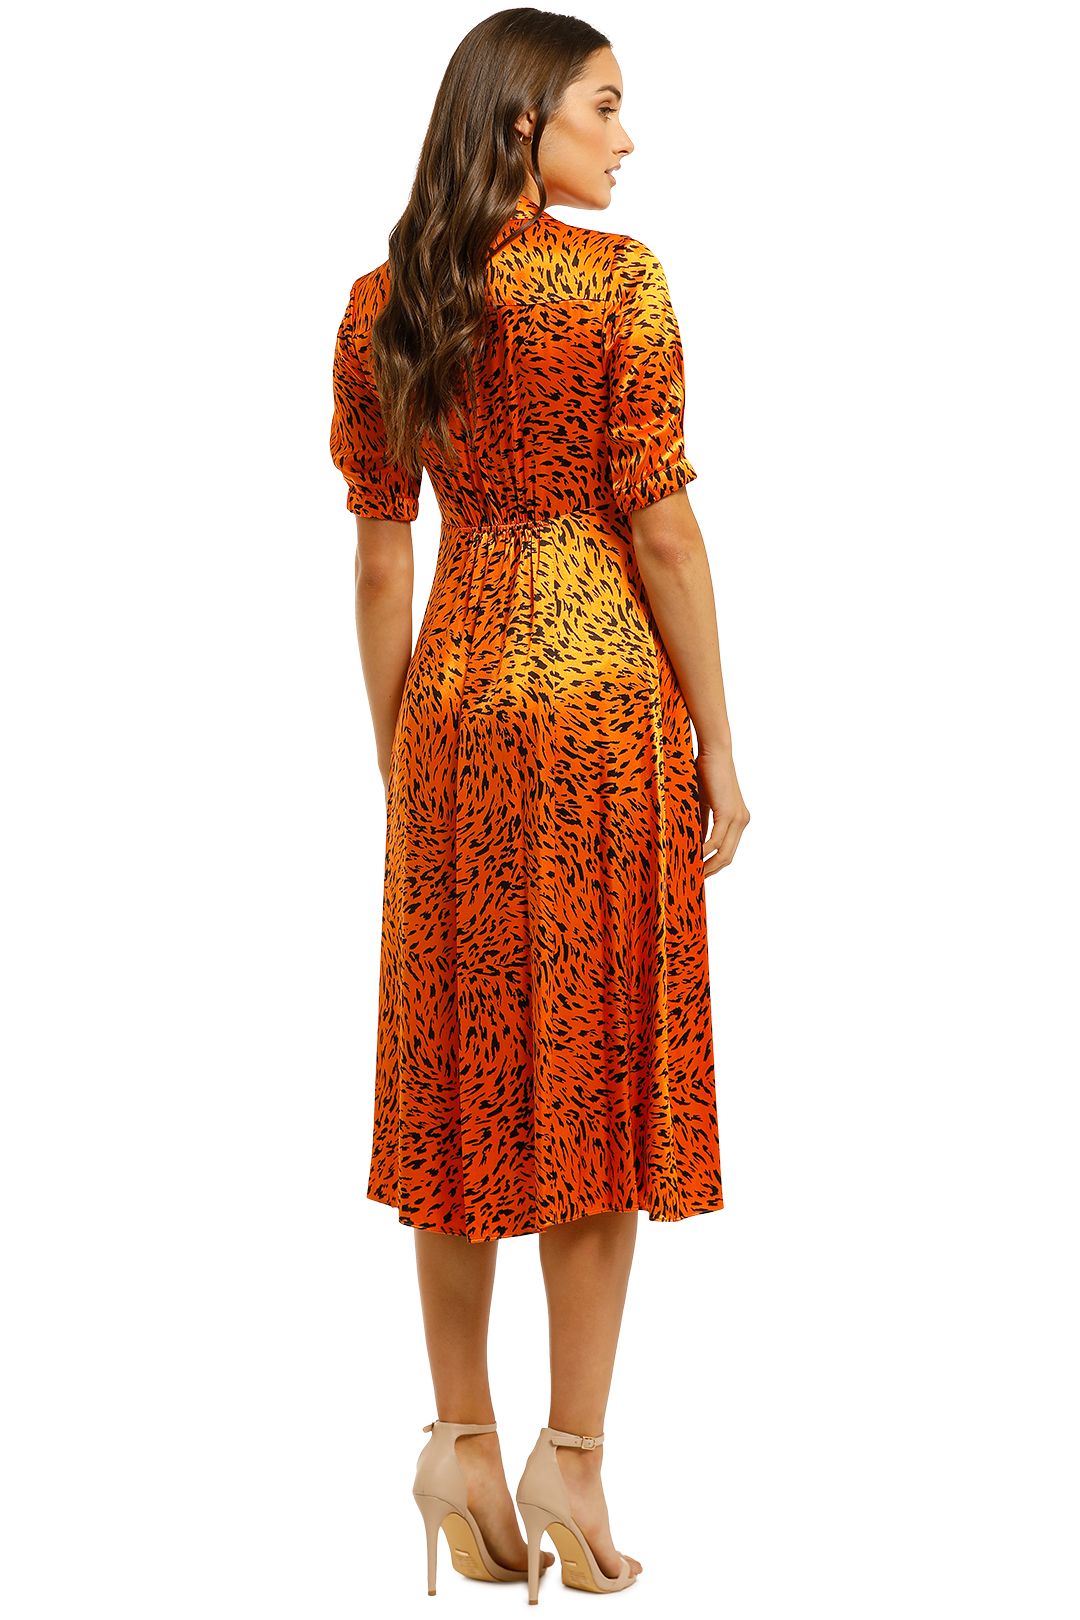 orange cheetah print dress